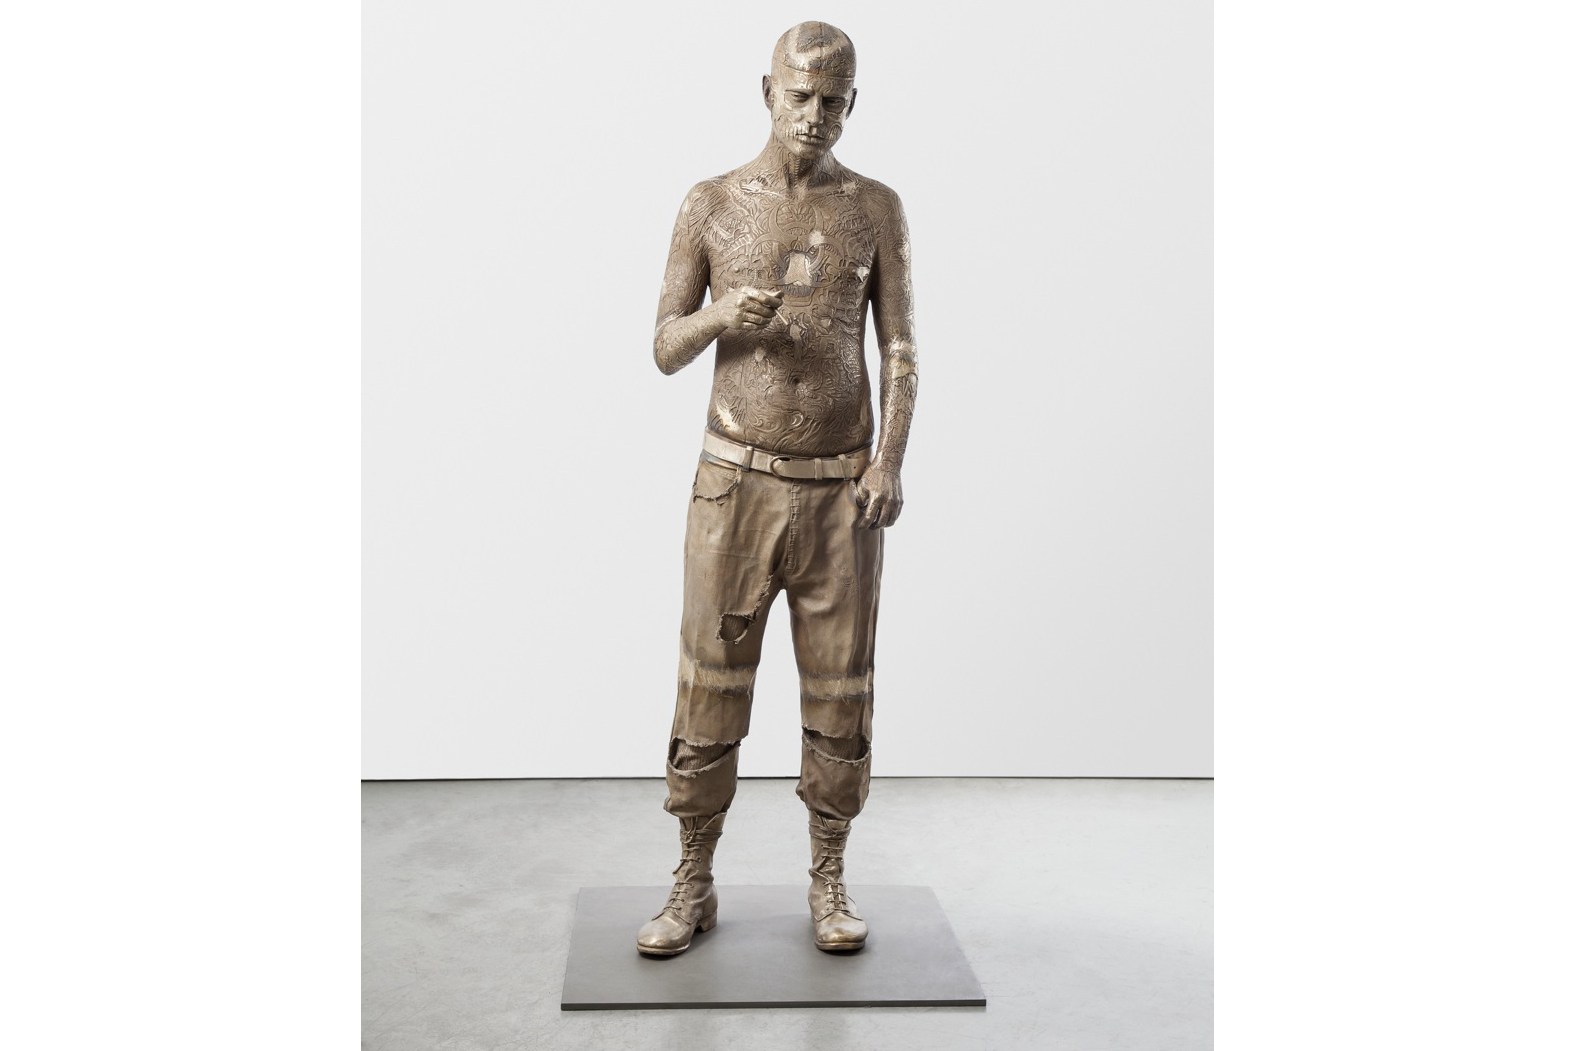 Marc Quinn 打造的 Rick Genest 雕像将于伦敦科学博物馆展出